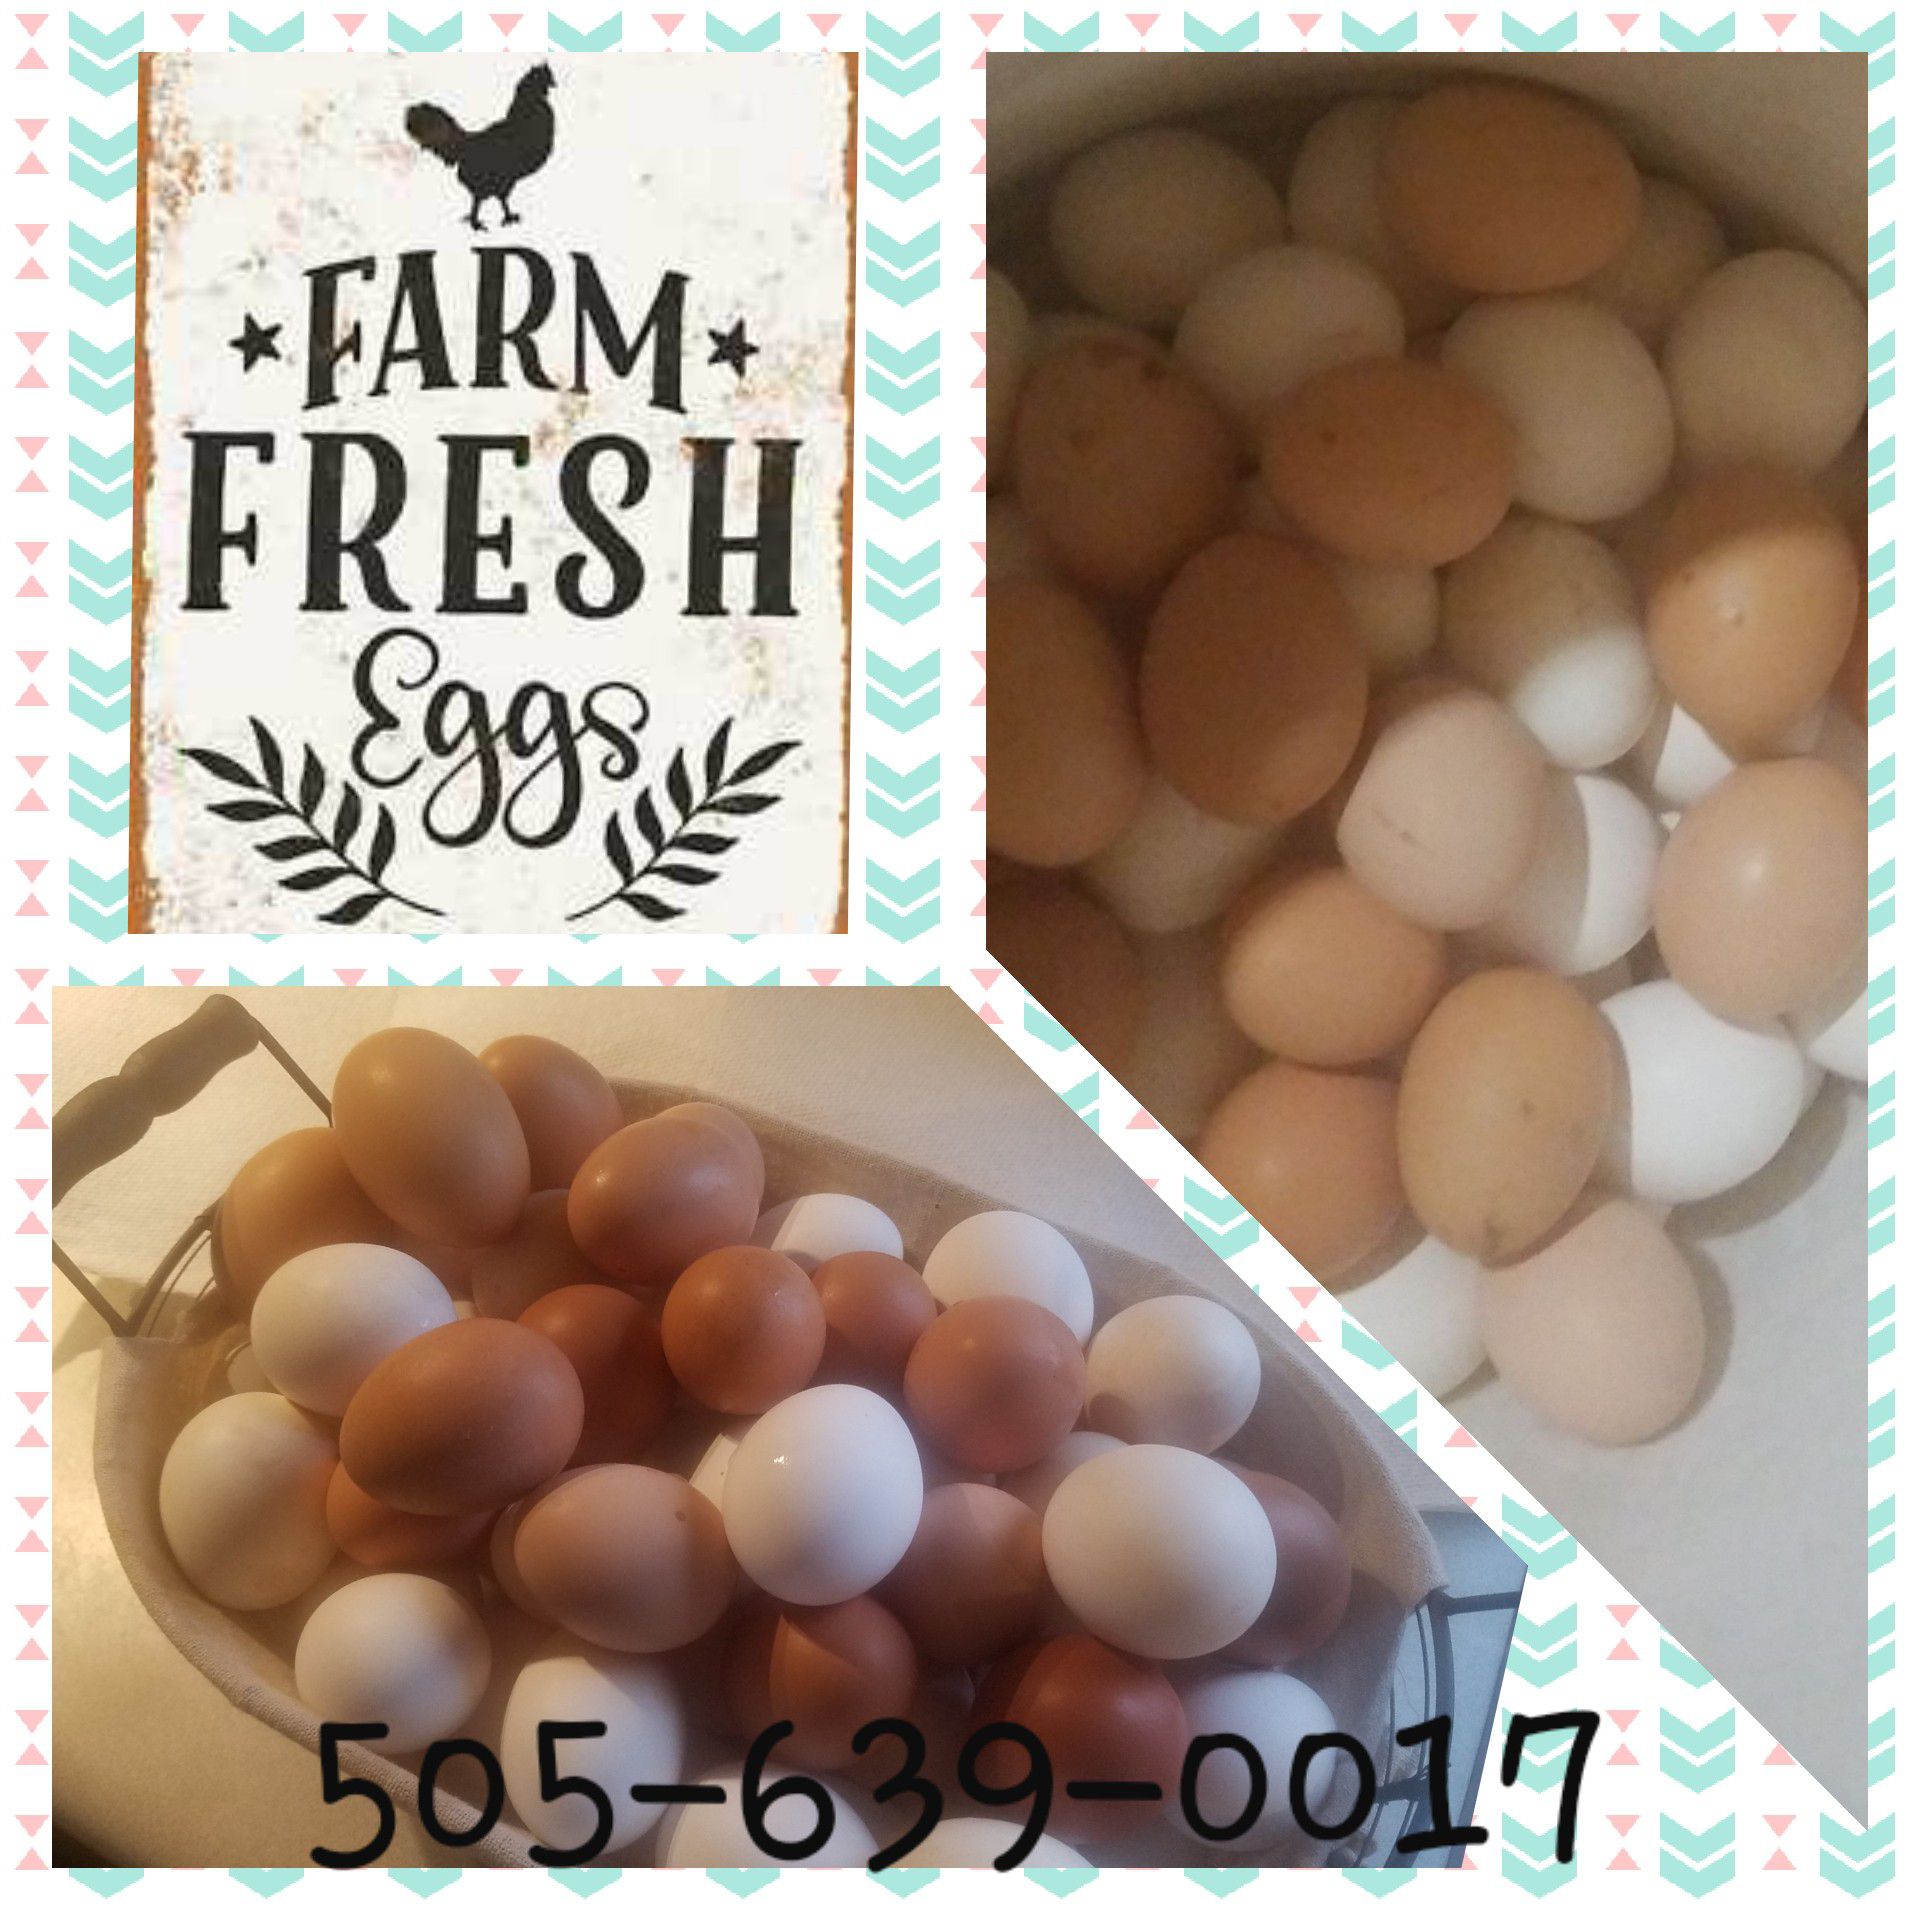 Organic frees Eggs